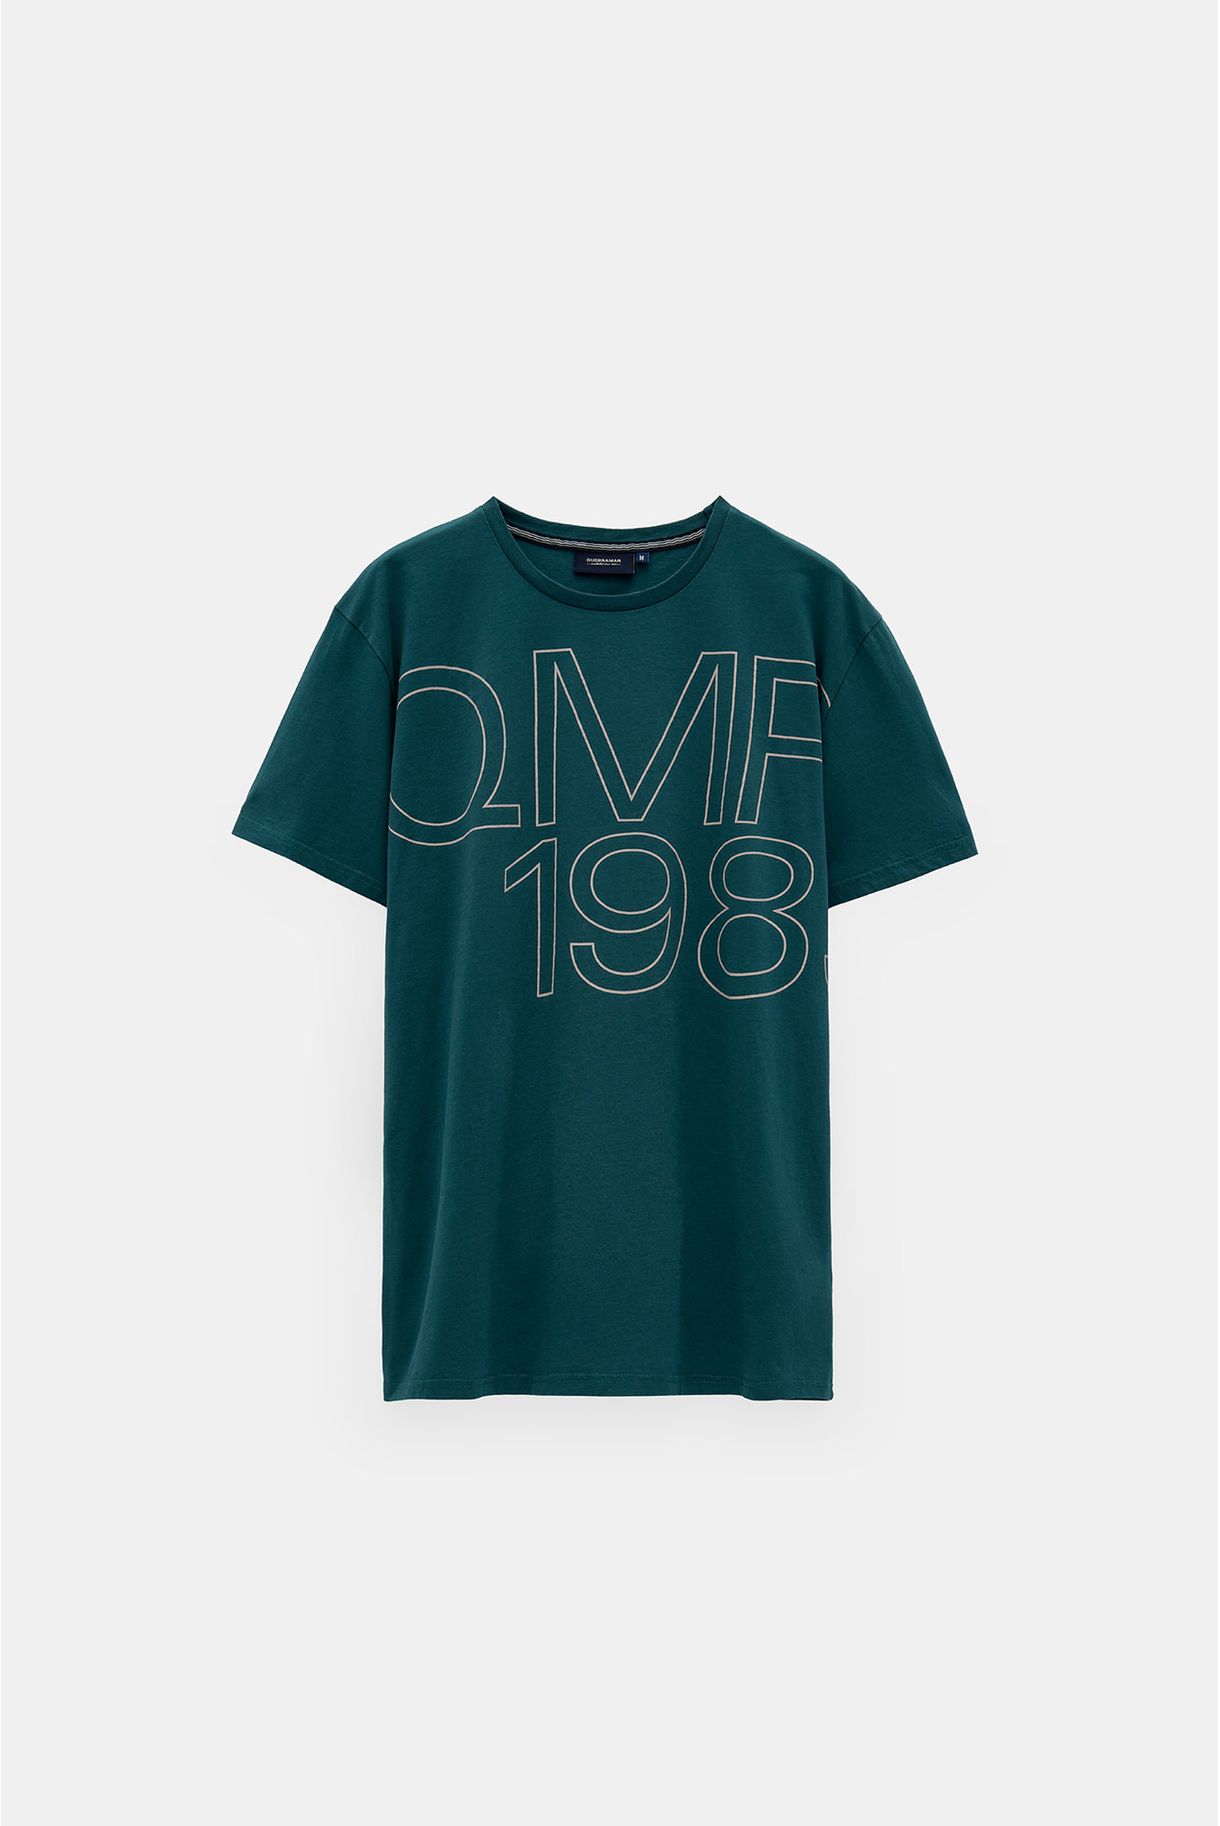 T-shirt QMR 1989